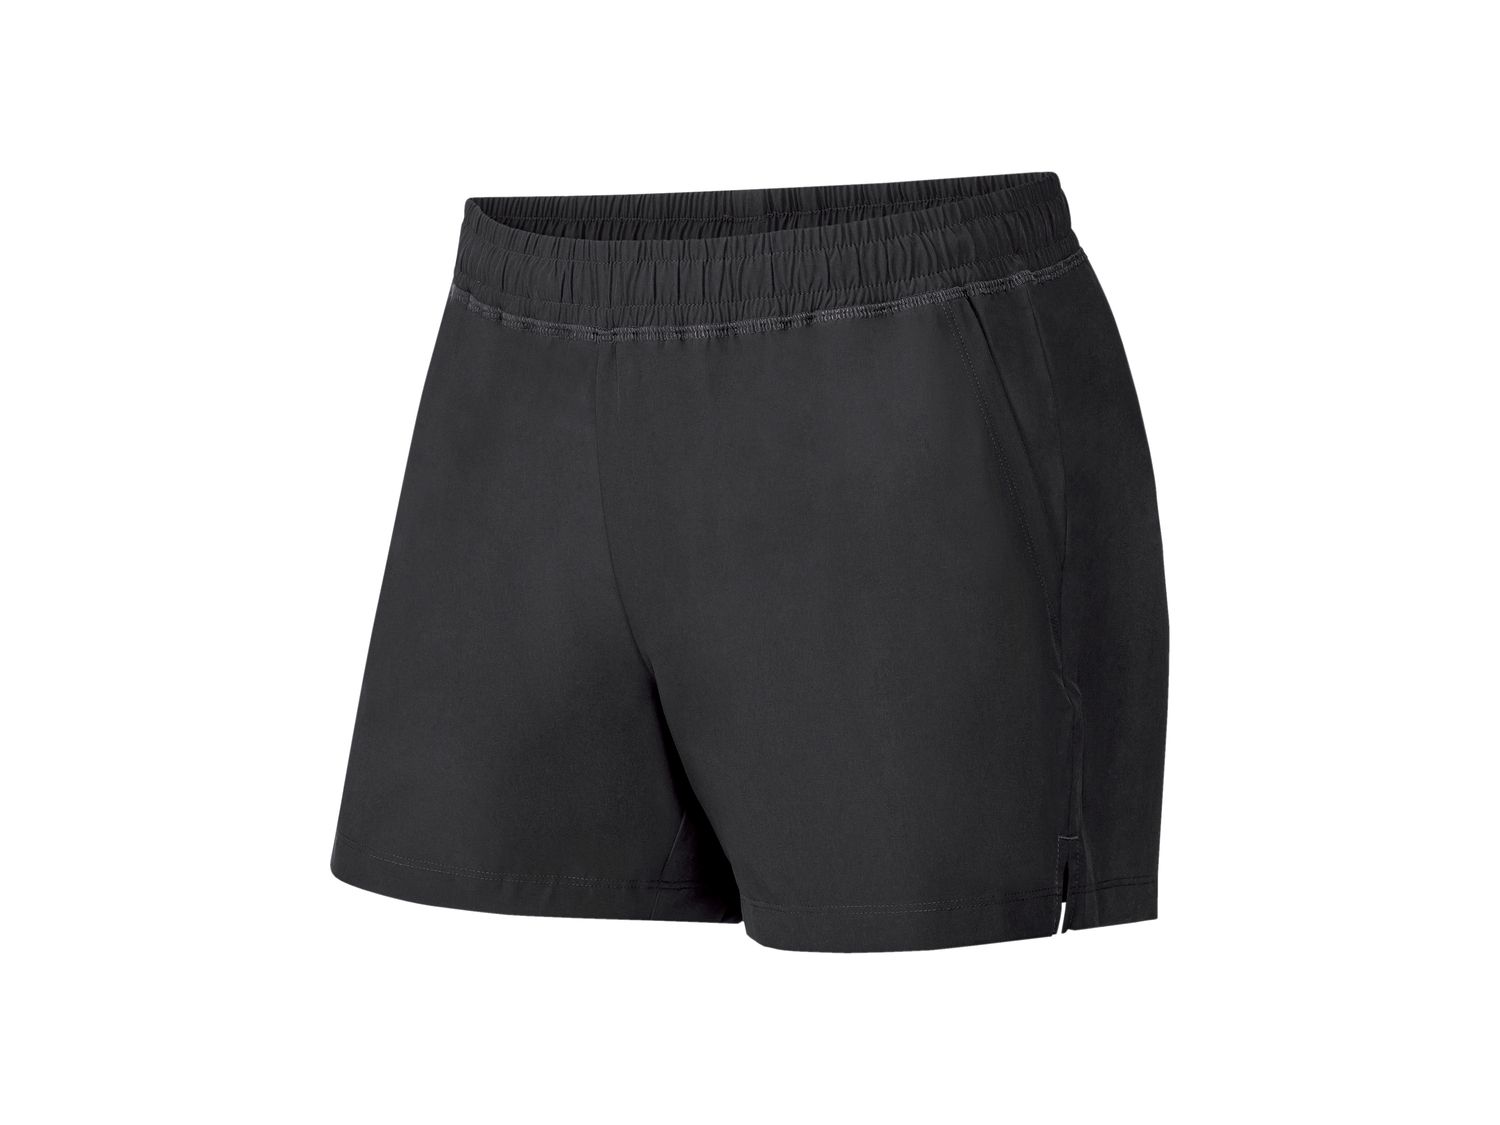 Shorts sportivi da donna Crivit, prezzo 5.99 &#8364; 
Misure: S-L 
- Prodotta ...